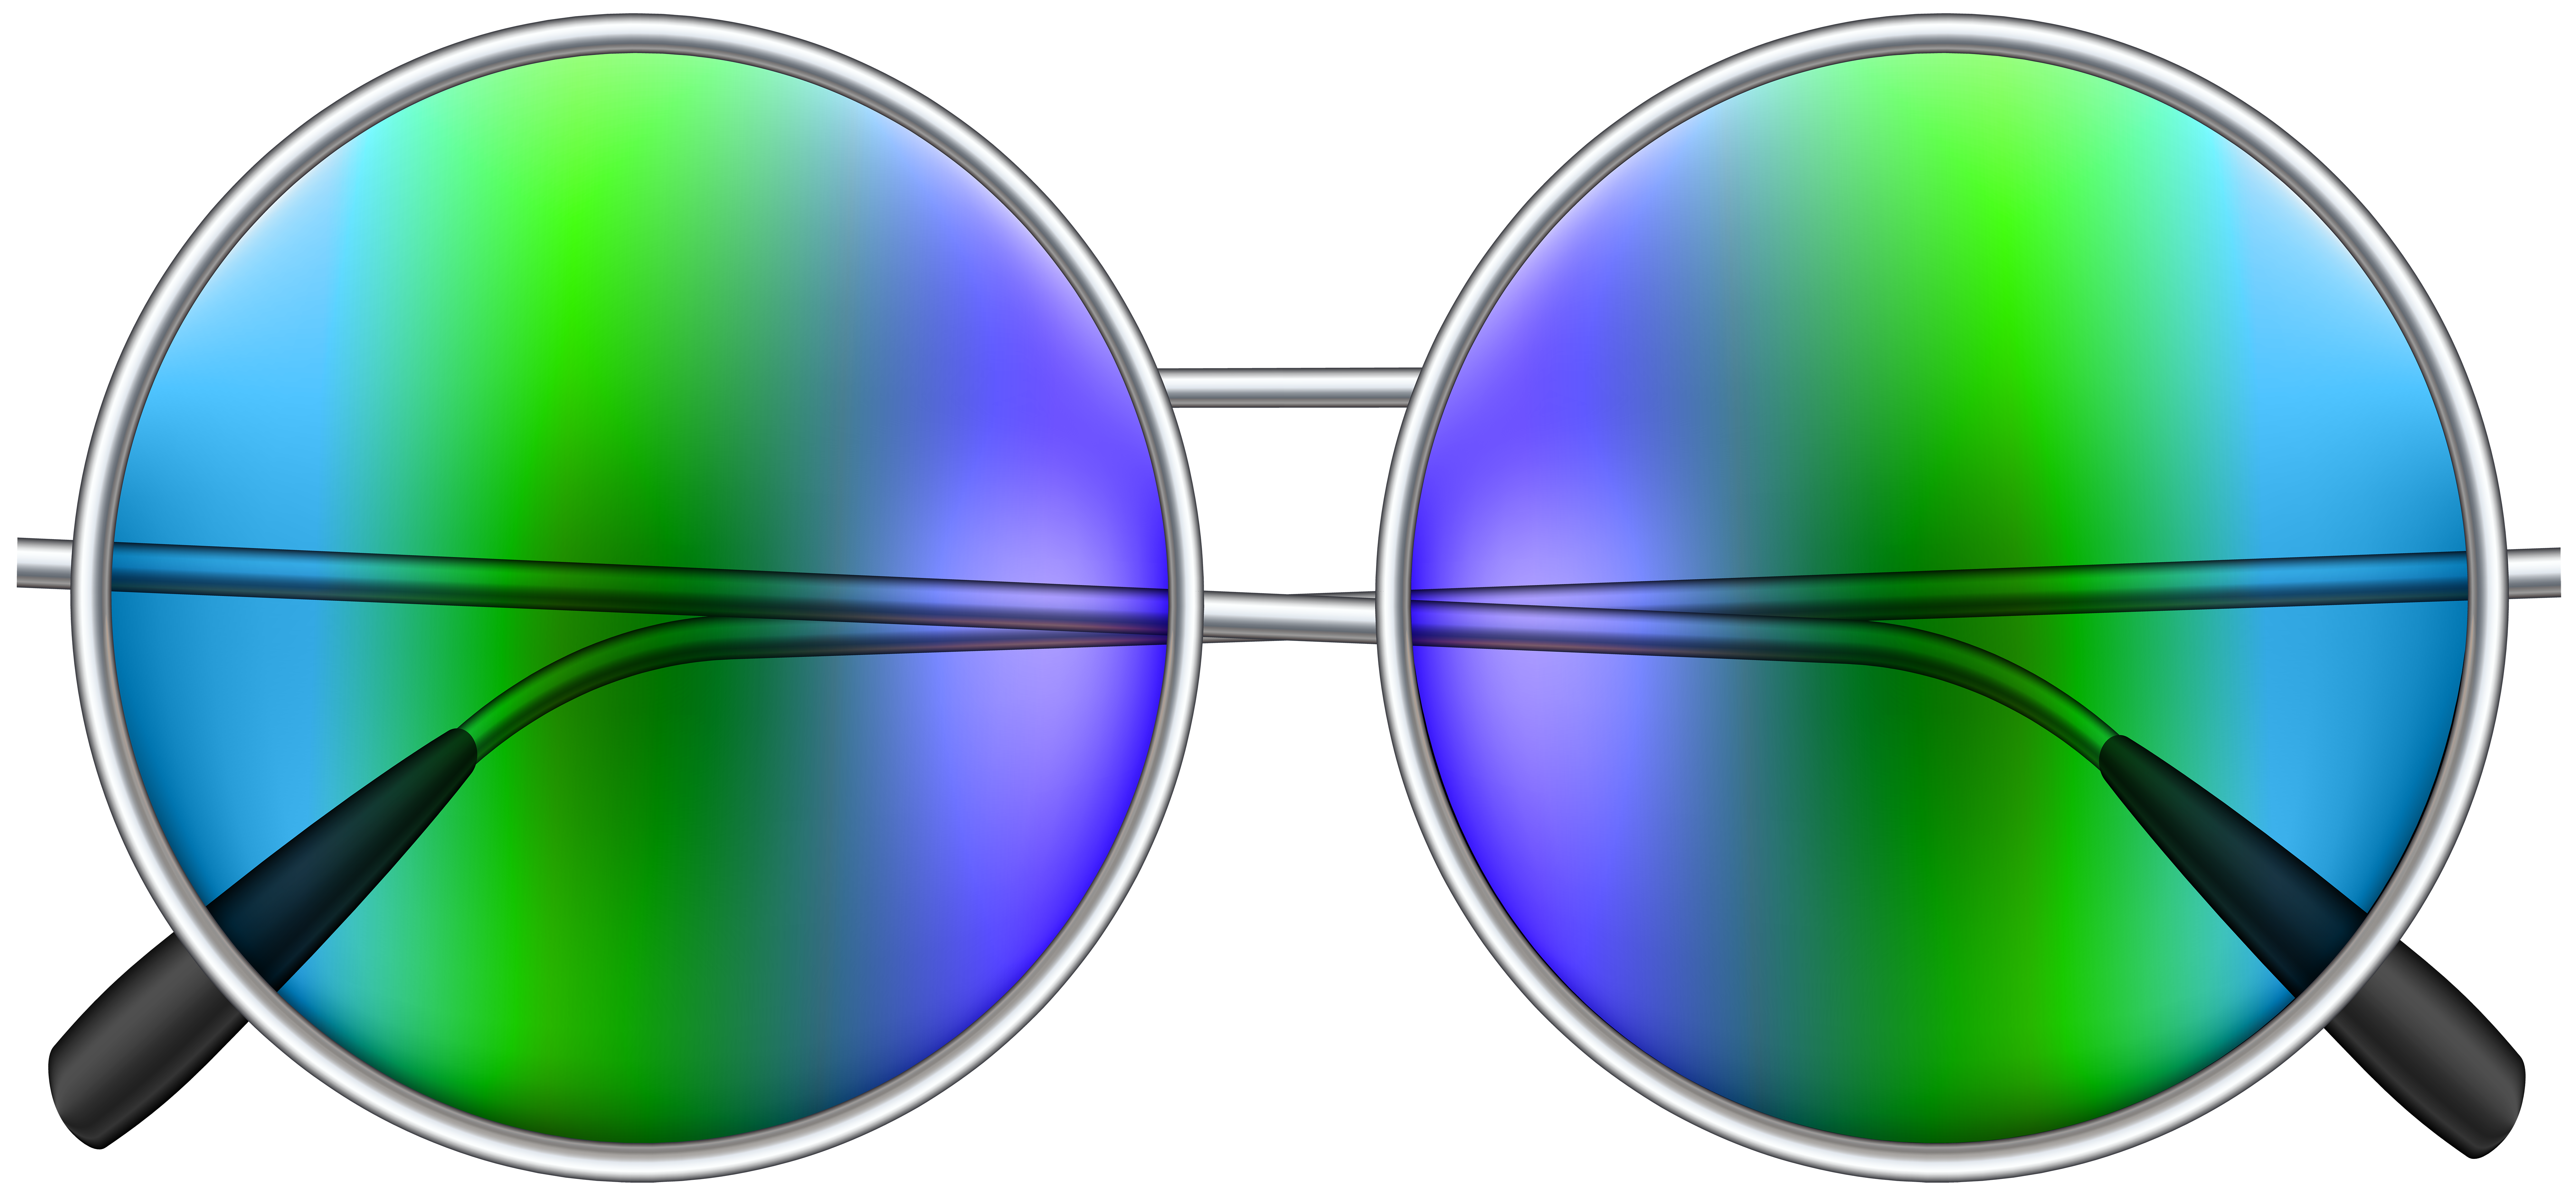 Sunglasses clipart green, Sunglasses green Transparent FREE